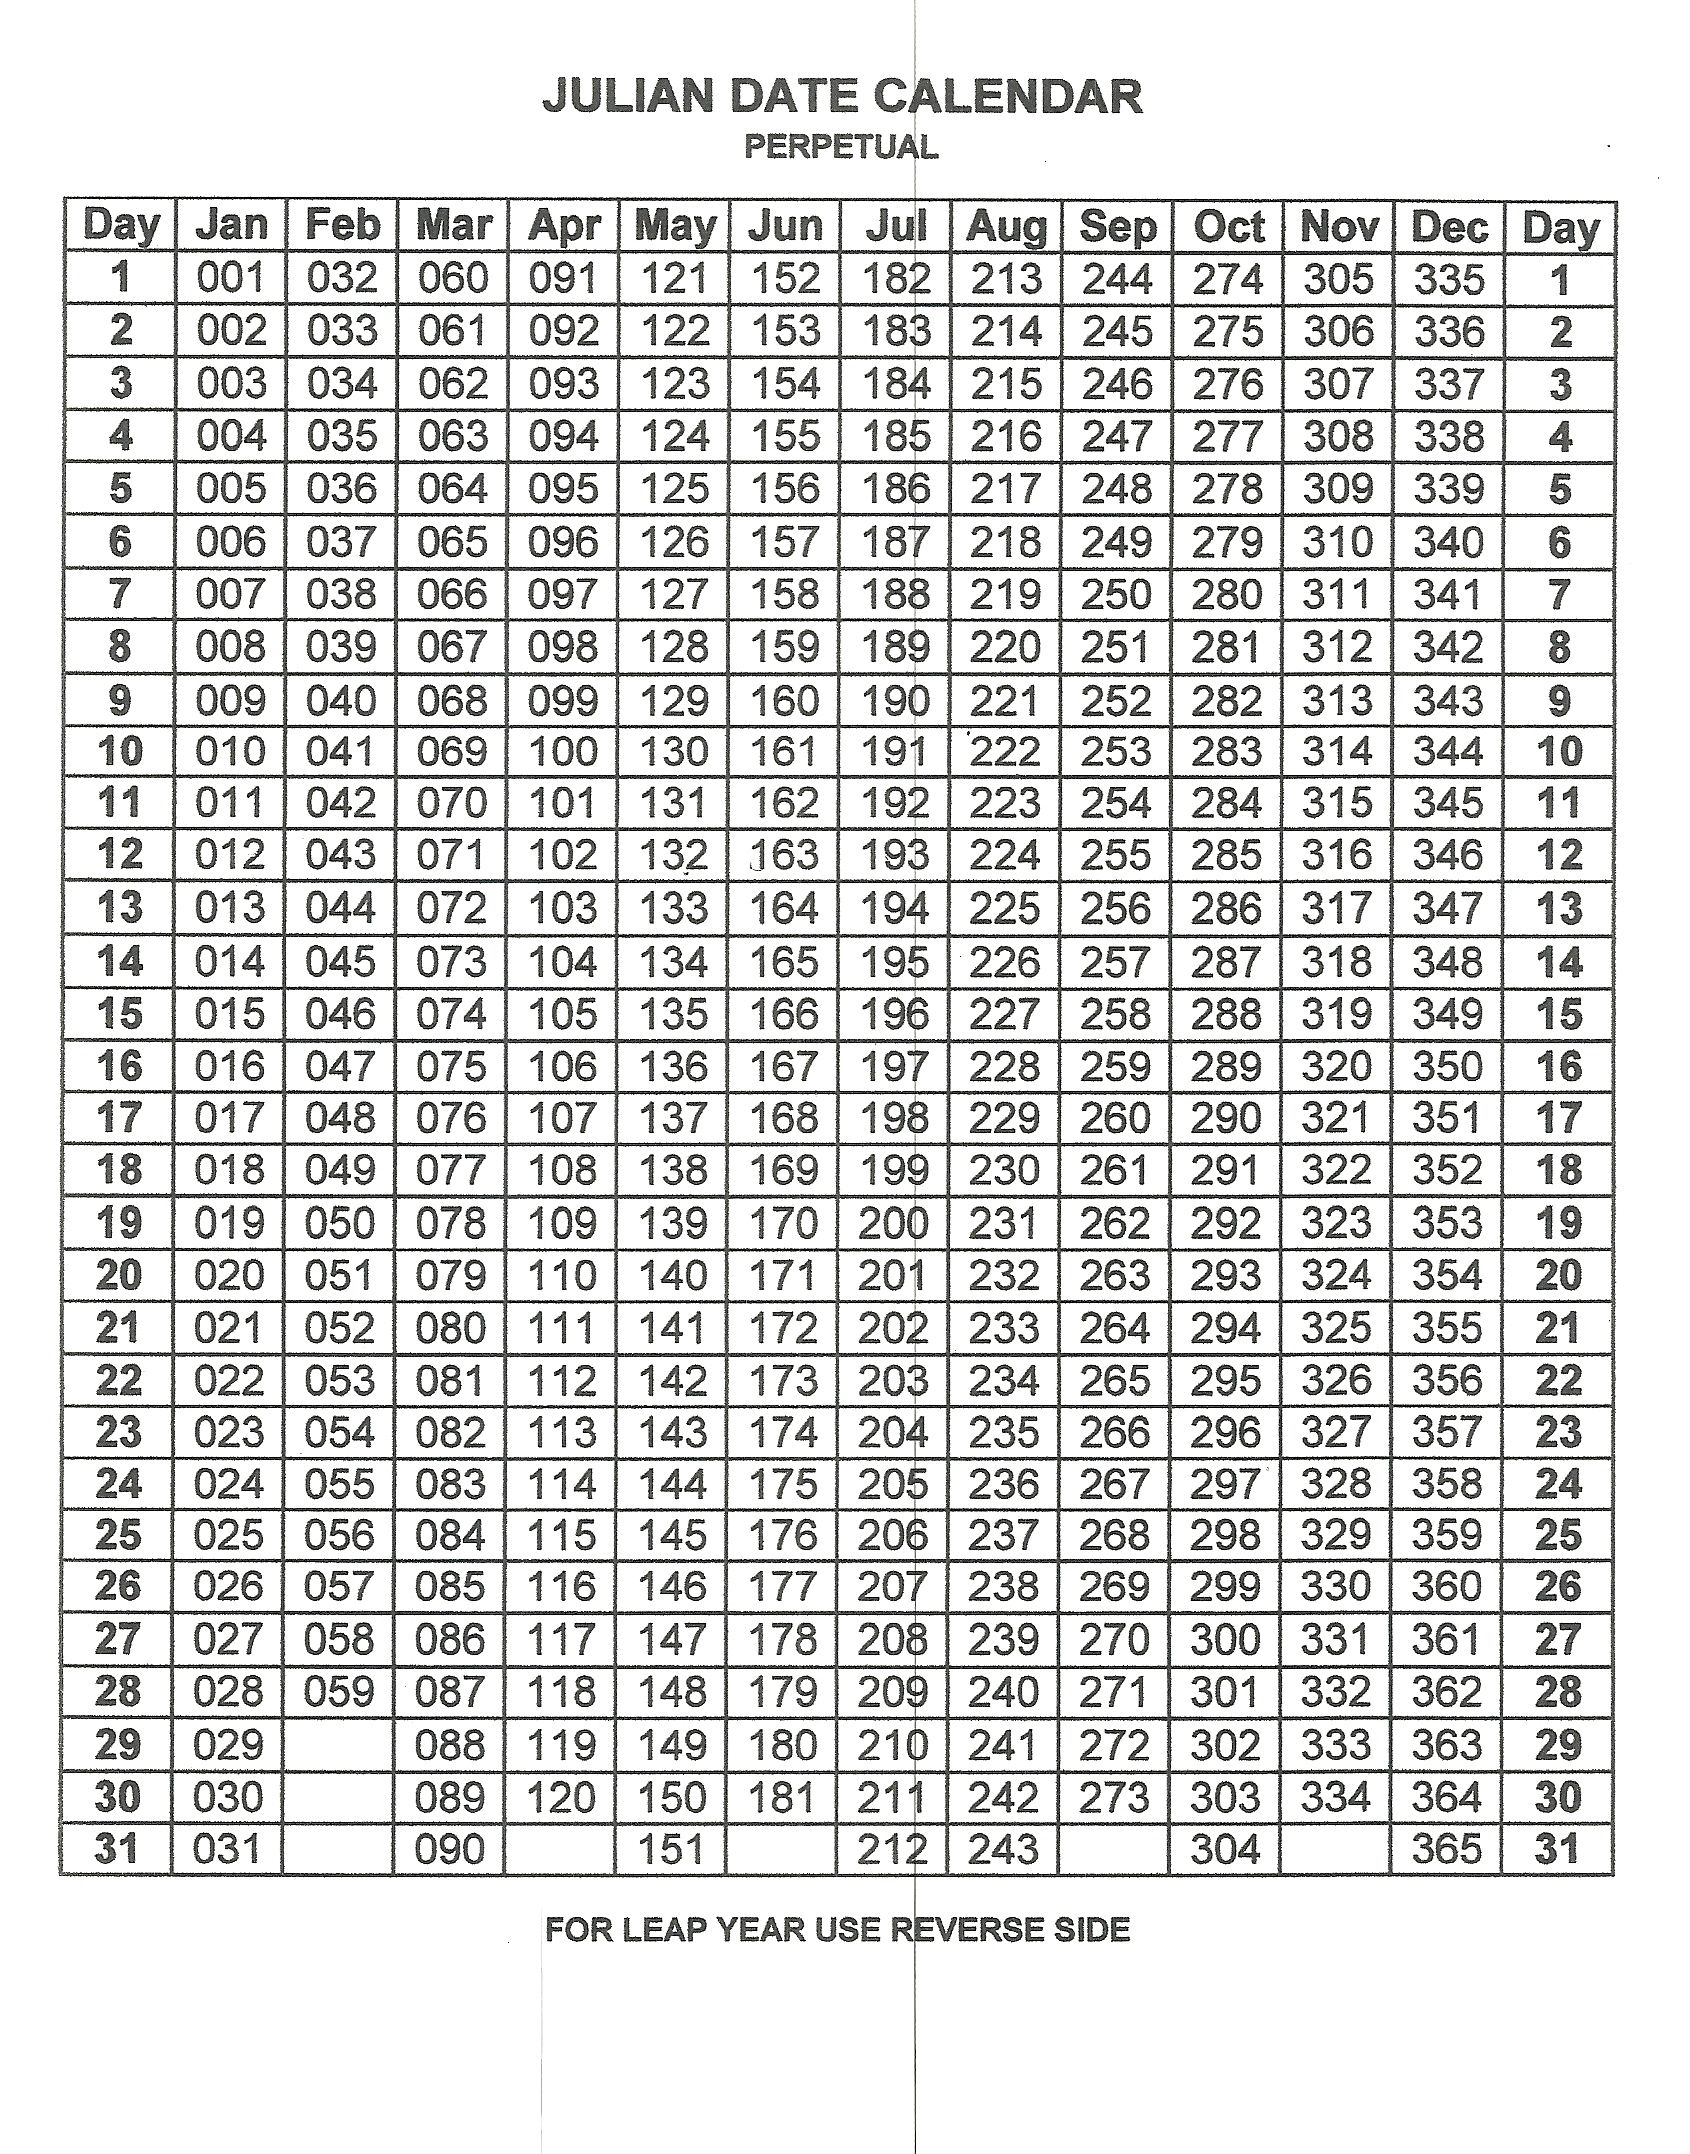 Perpetual Julian Date Calendar | Julian Dates, Calendar for Julian Calendar Pdf